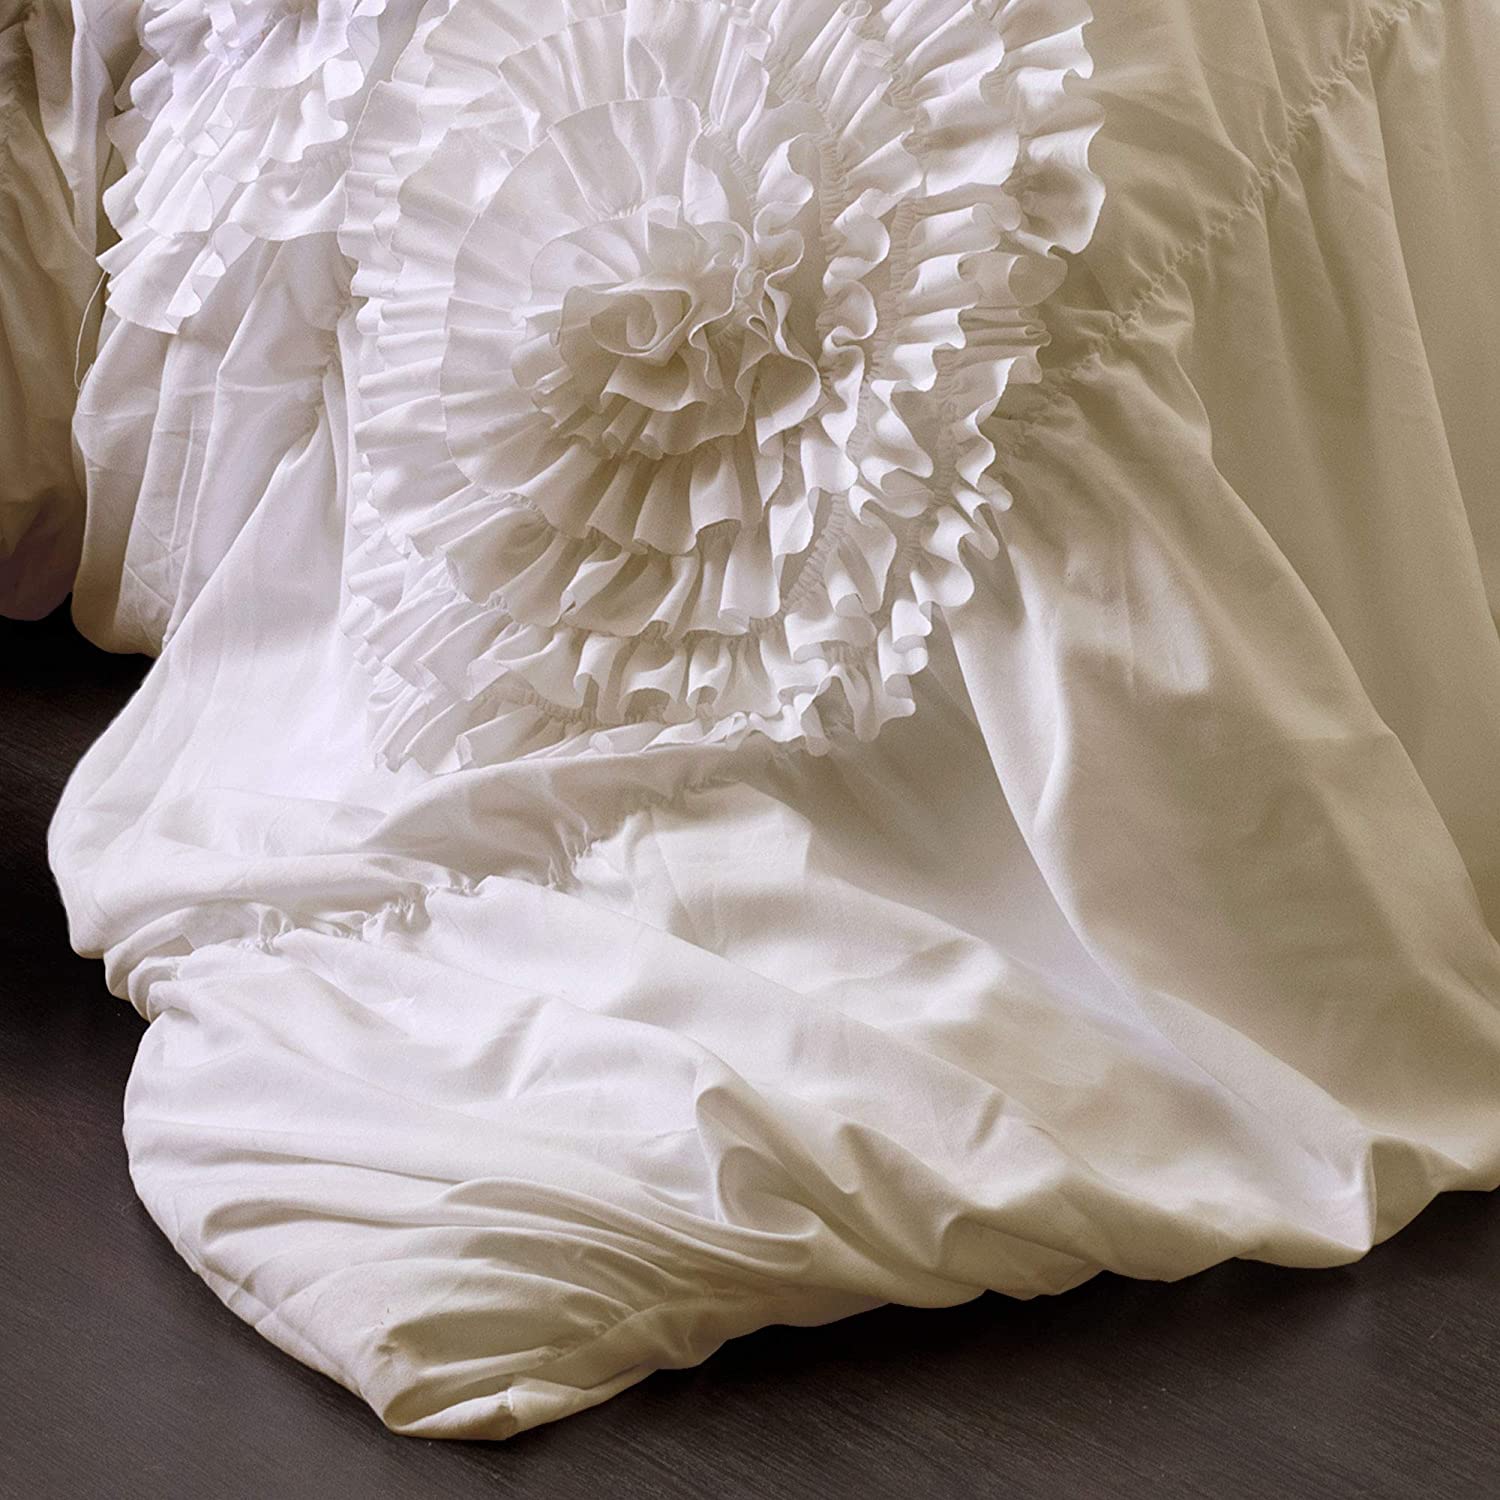 Lush Decor Serena Comforter Ivory Ruched Flower 3 Piece Set, King | eBay